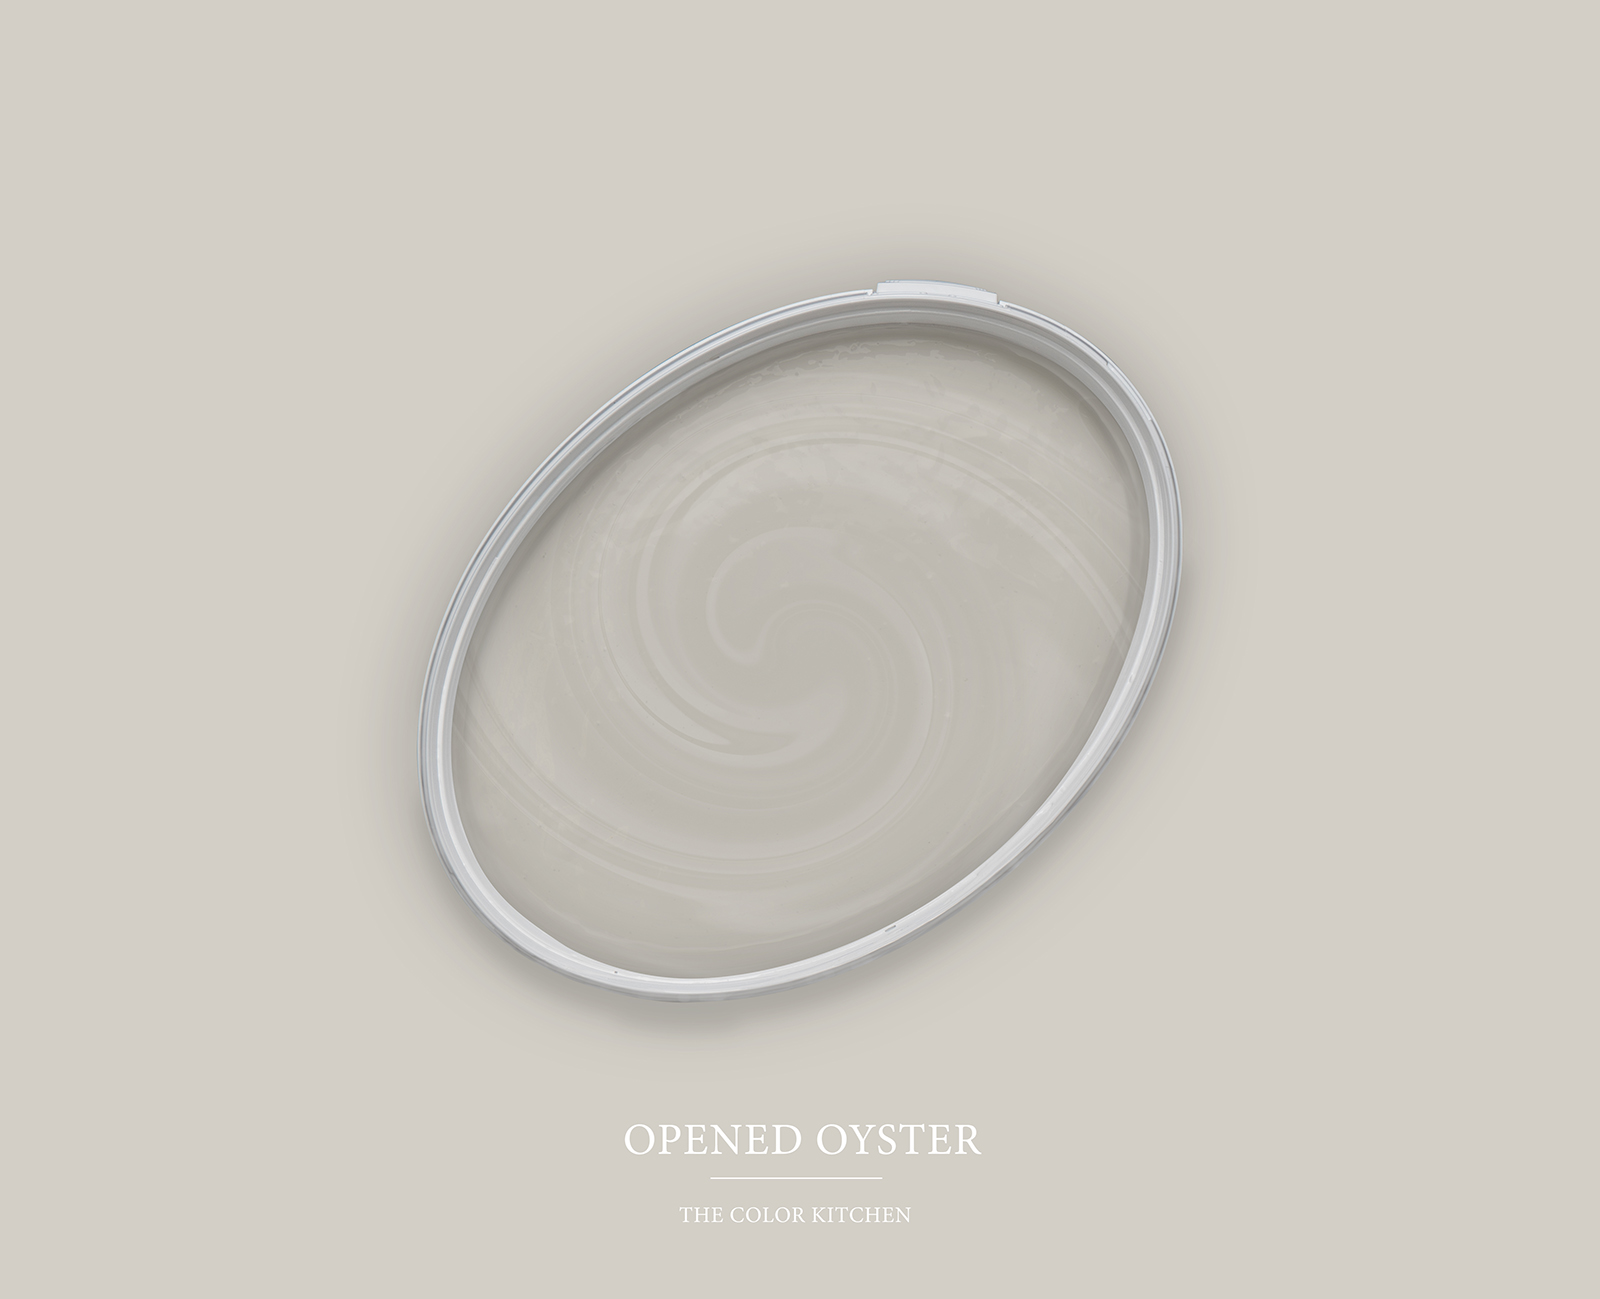         Wandfarbe in zartem Grau »Opened Oyster« TCK1016 – 2,5 Liter
    